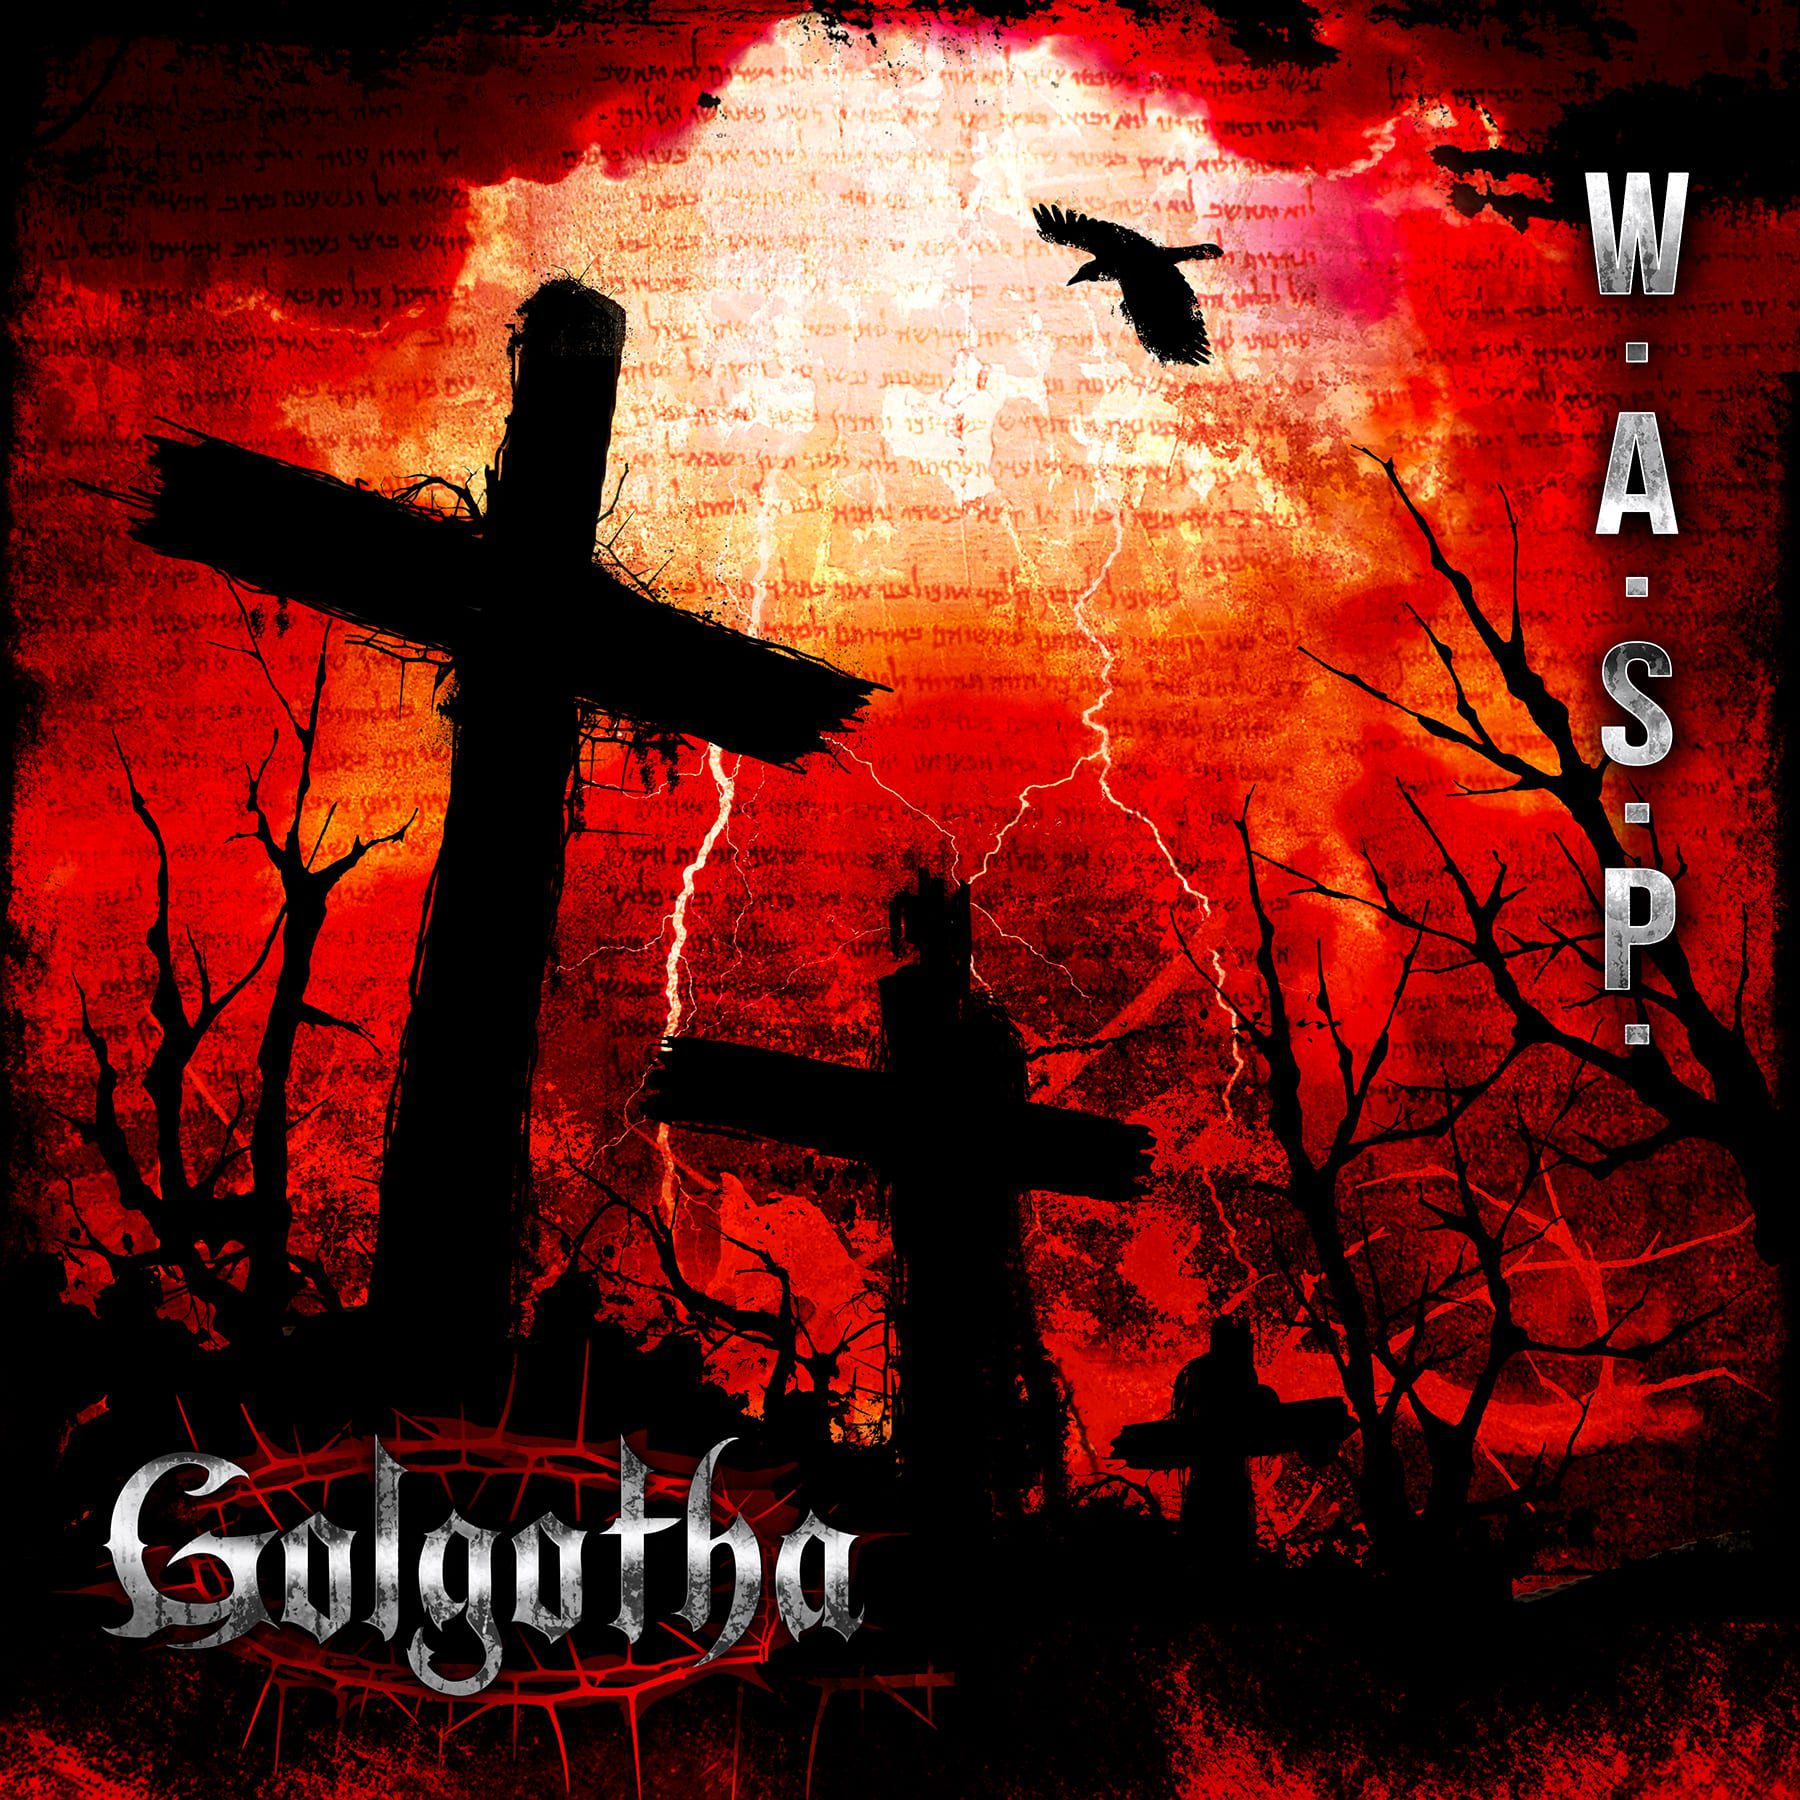 W.A.S.P. – Golgotha